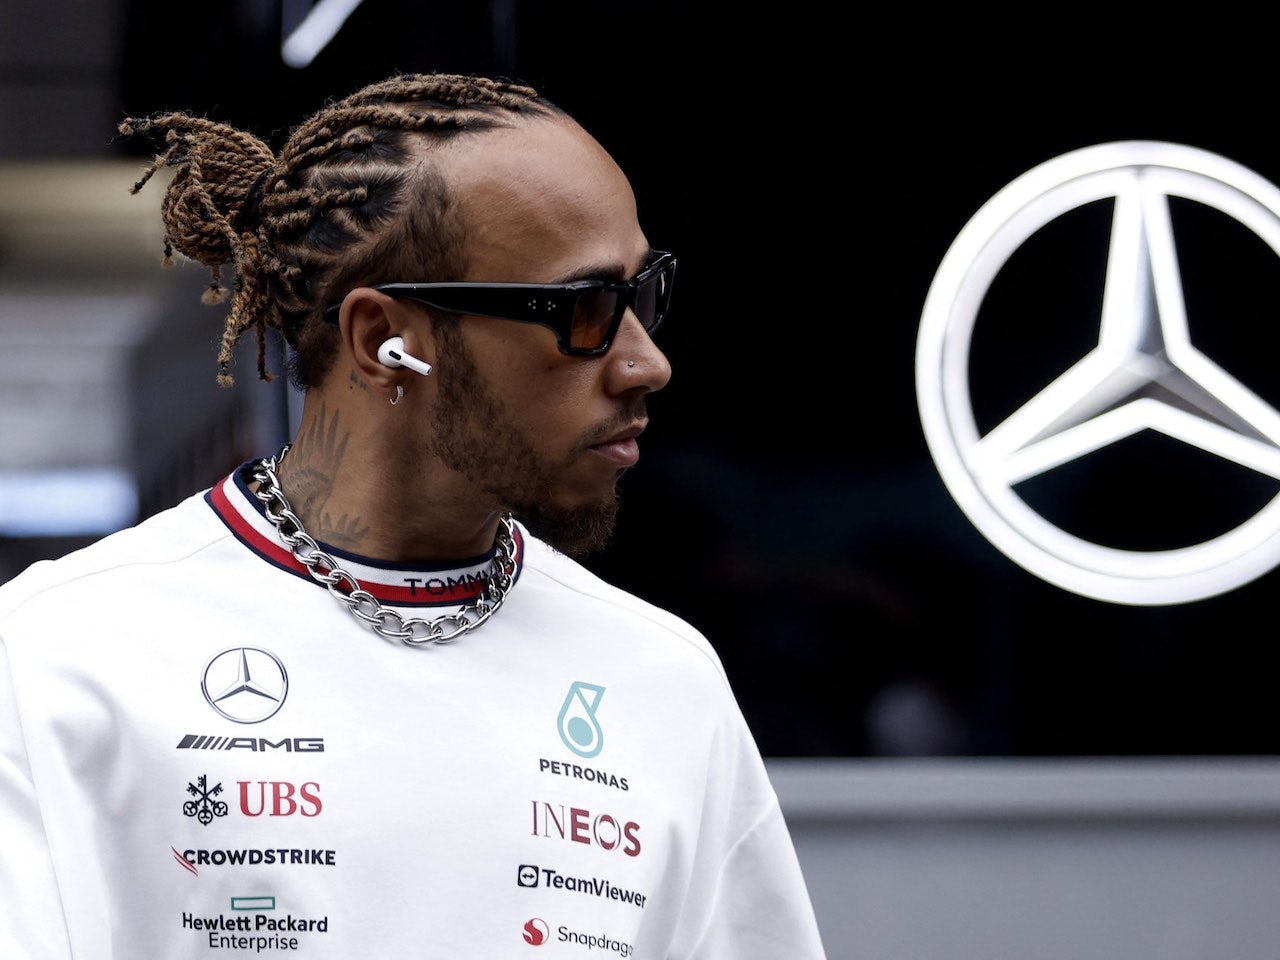 Hamilton unwavering on Ferrari move despite Mercedes' gains